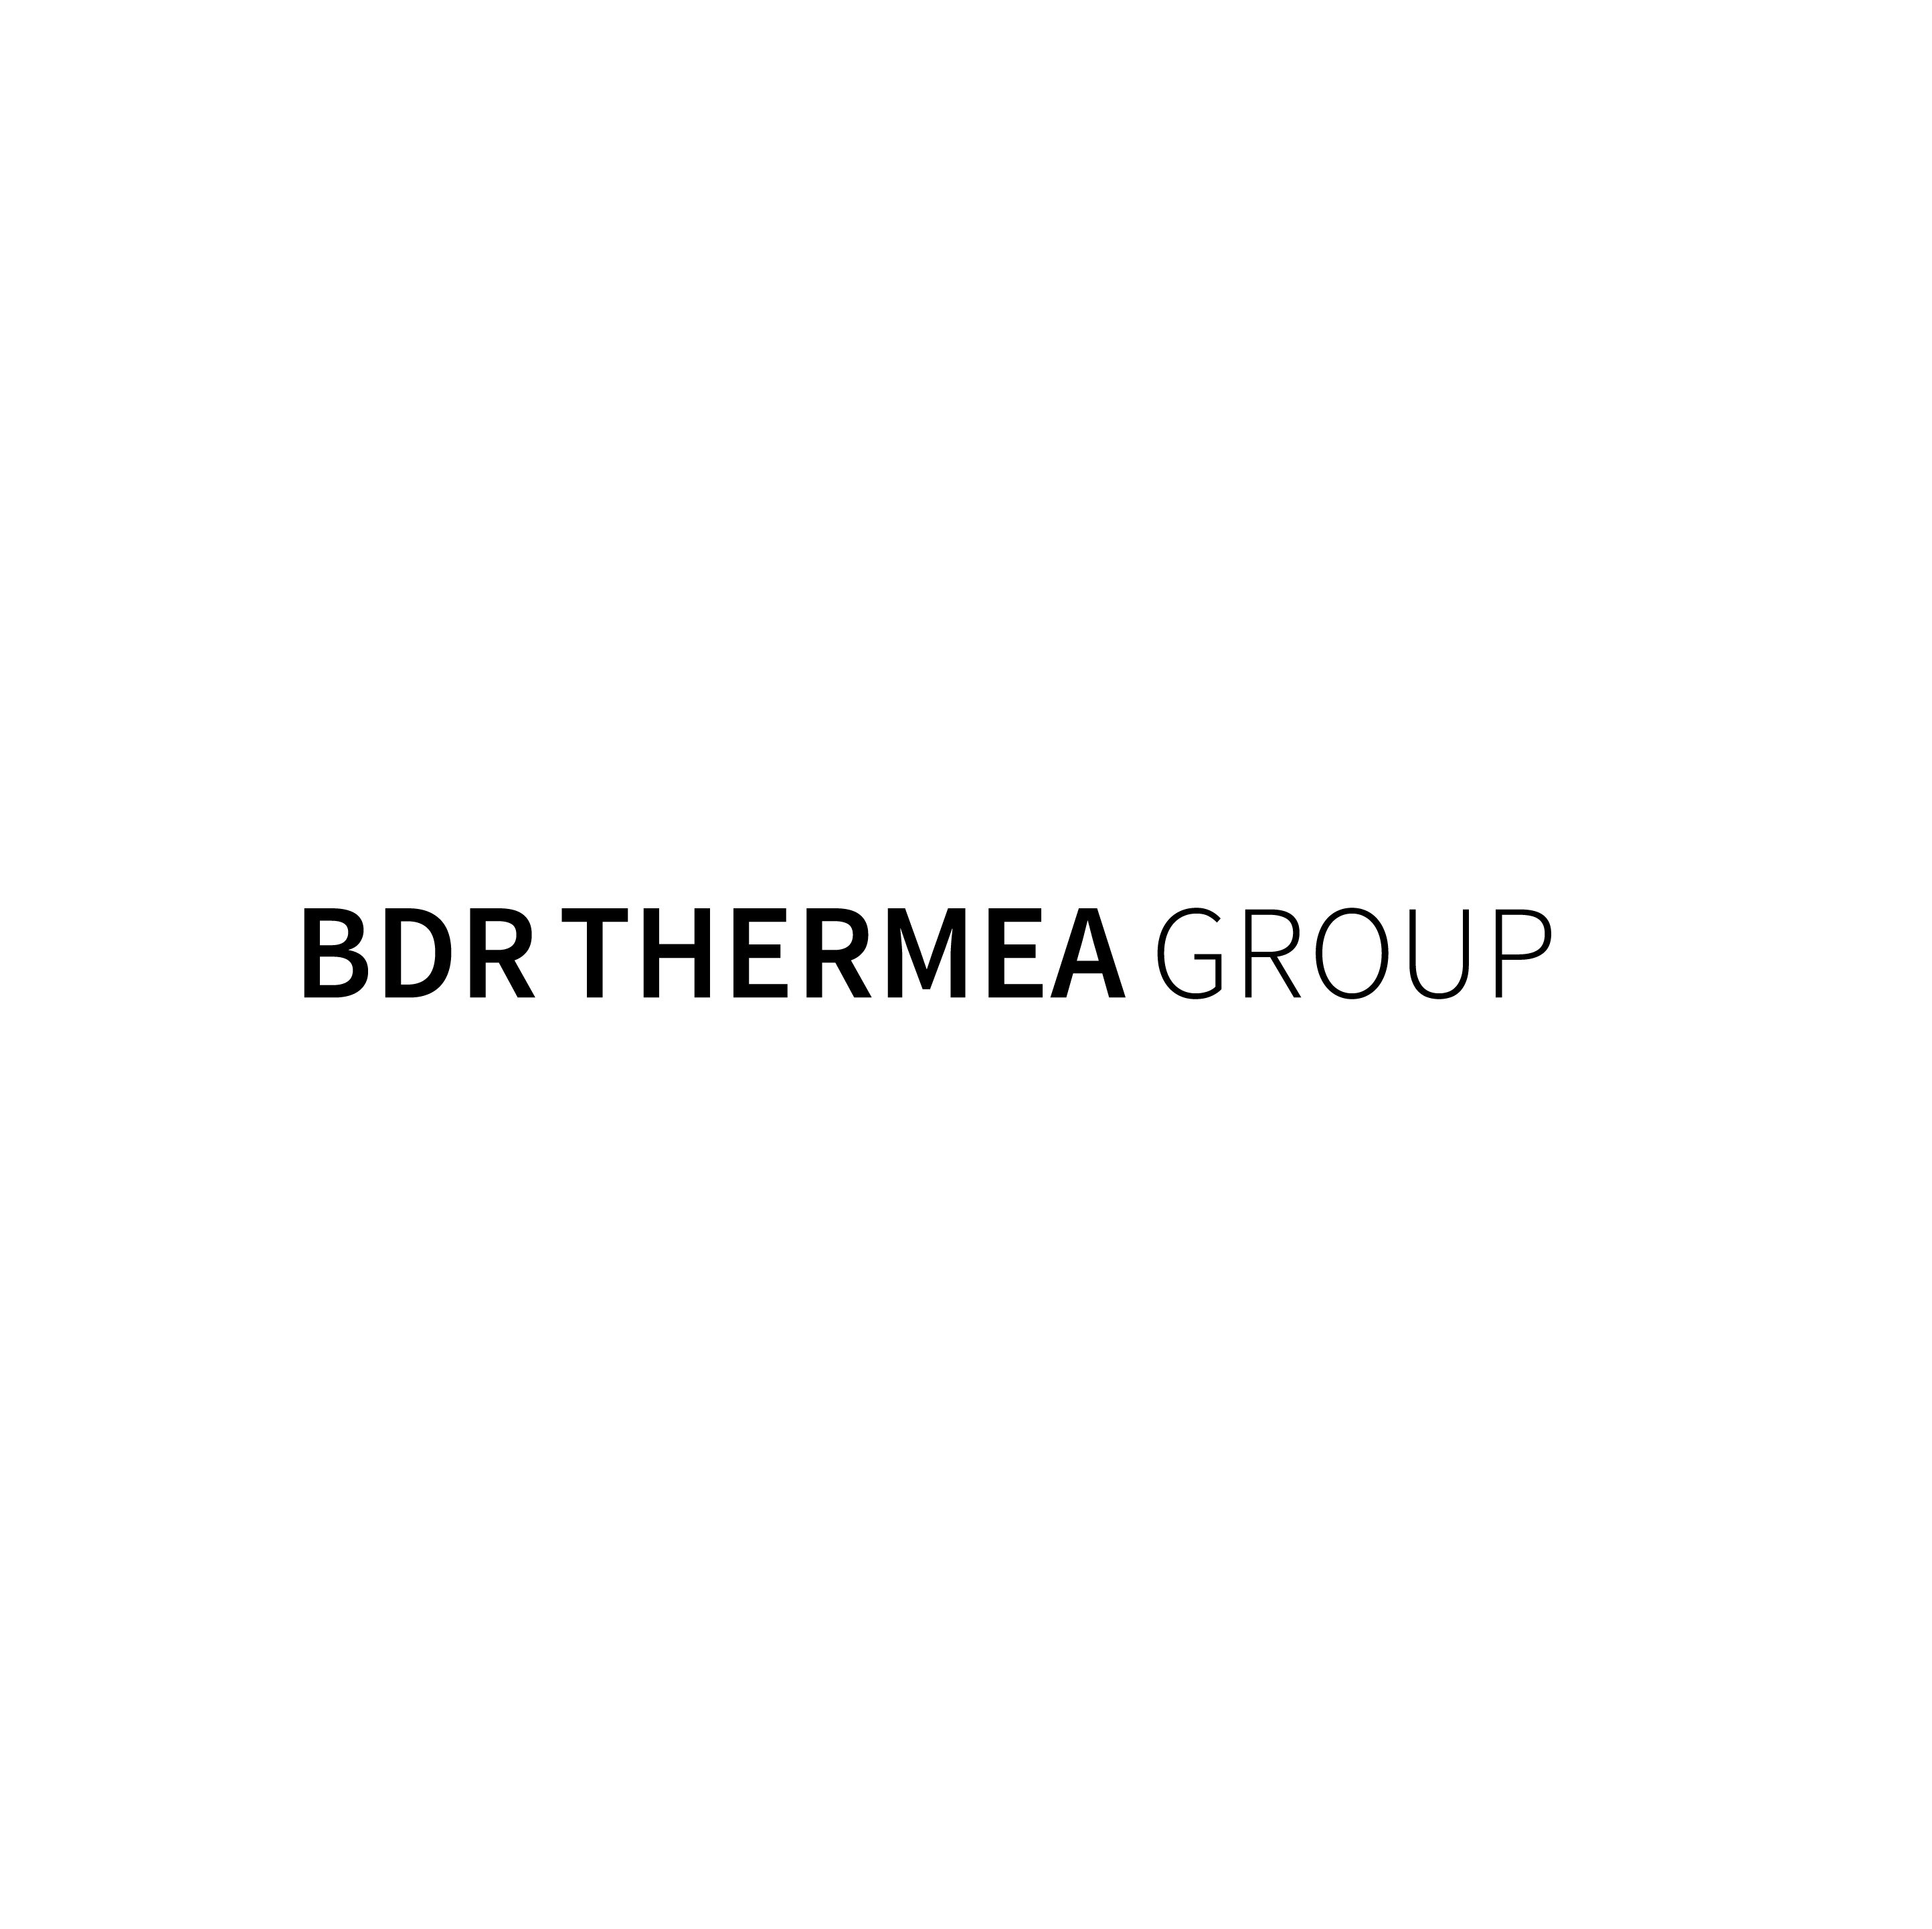 aw-corporate-logo-master BDR_2